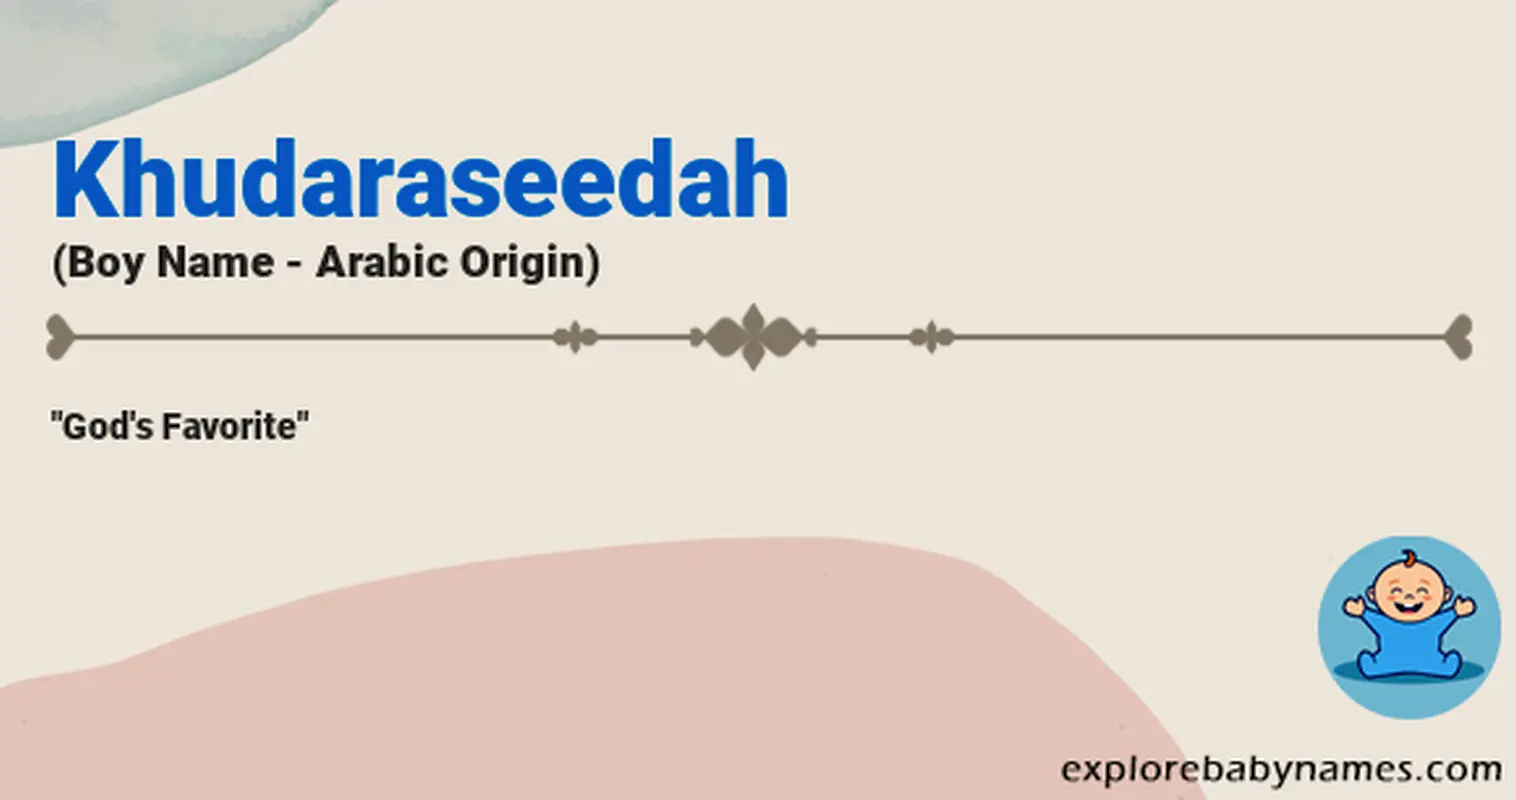 Meaning of Khudaraseedah